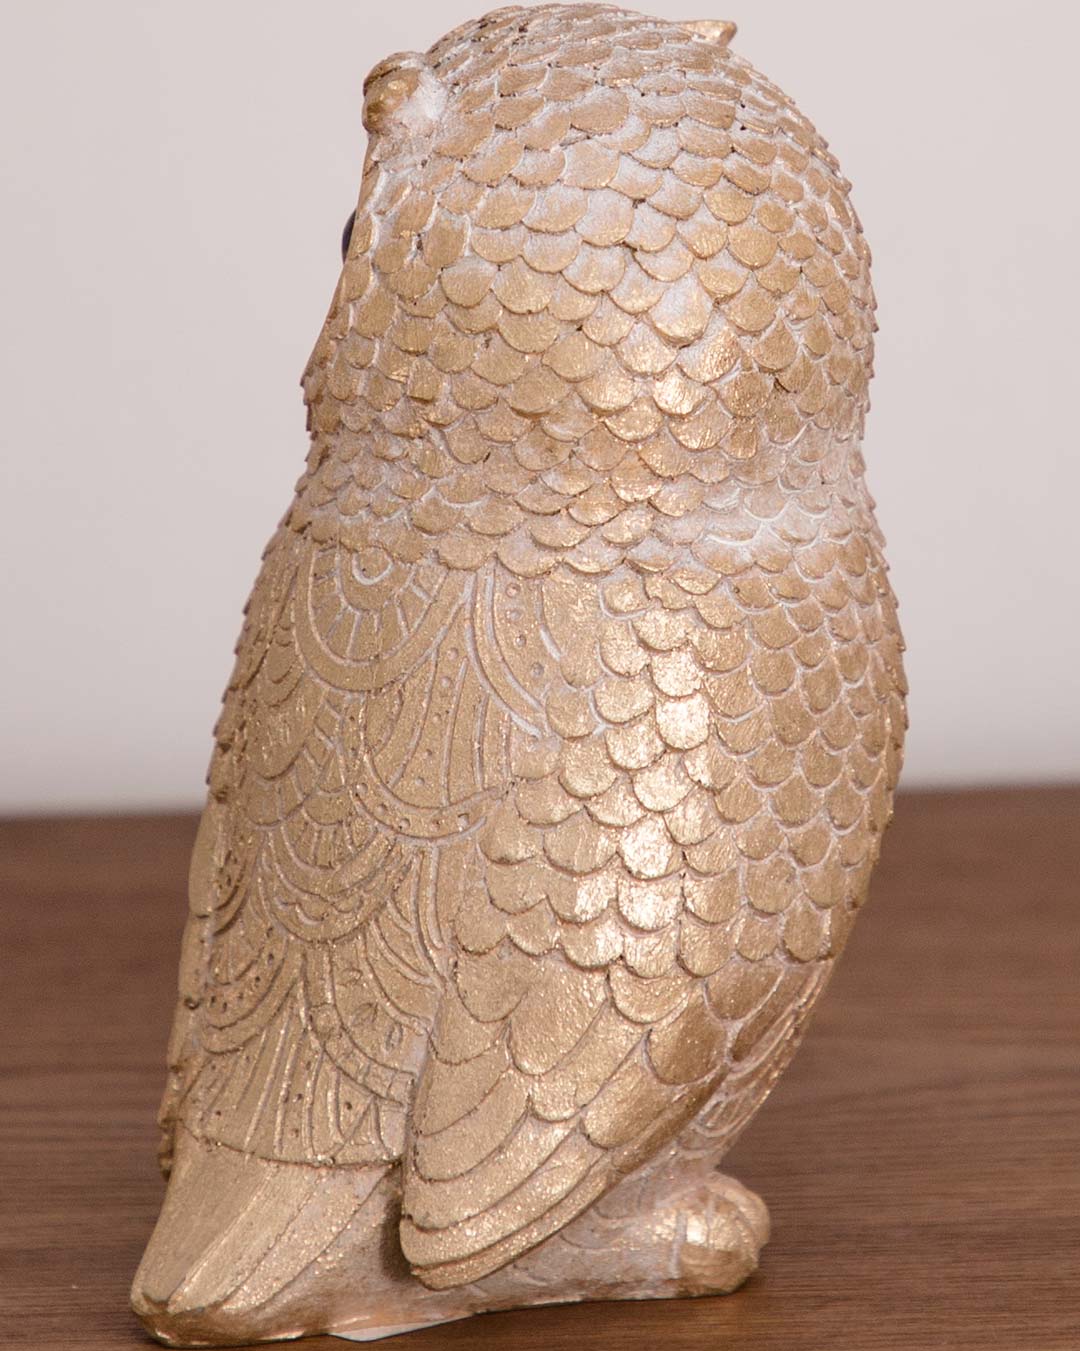 Enchanting Night: Timeless Owl Figurine